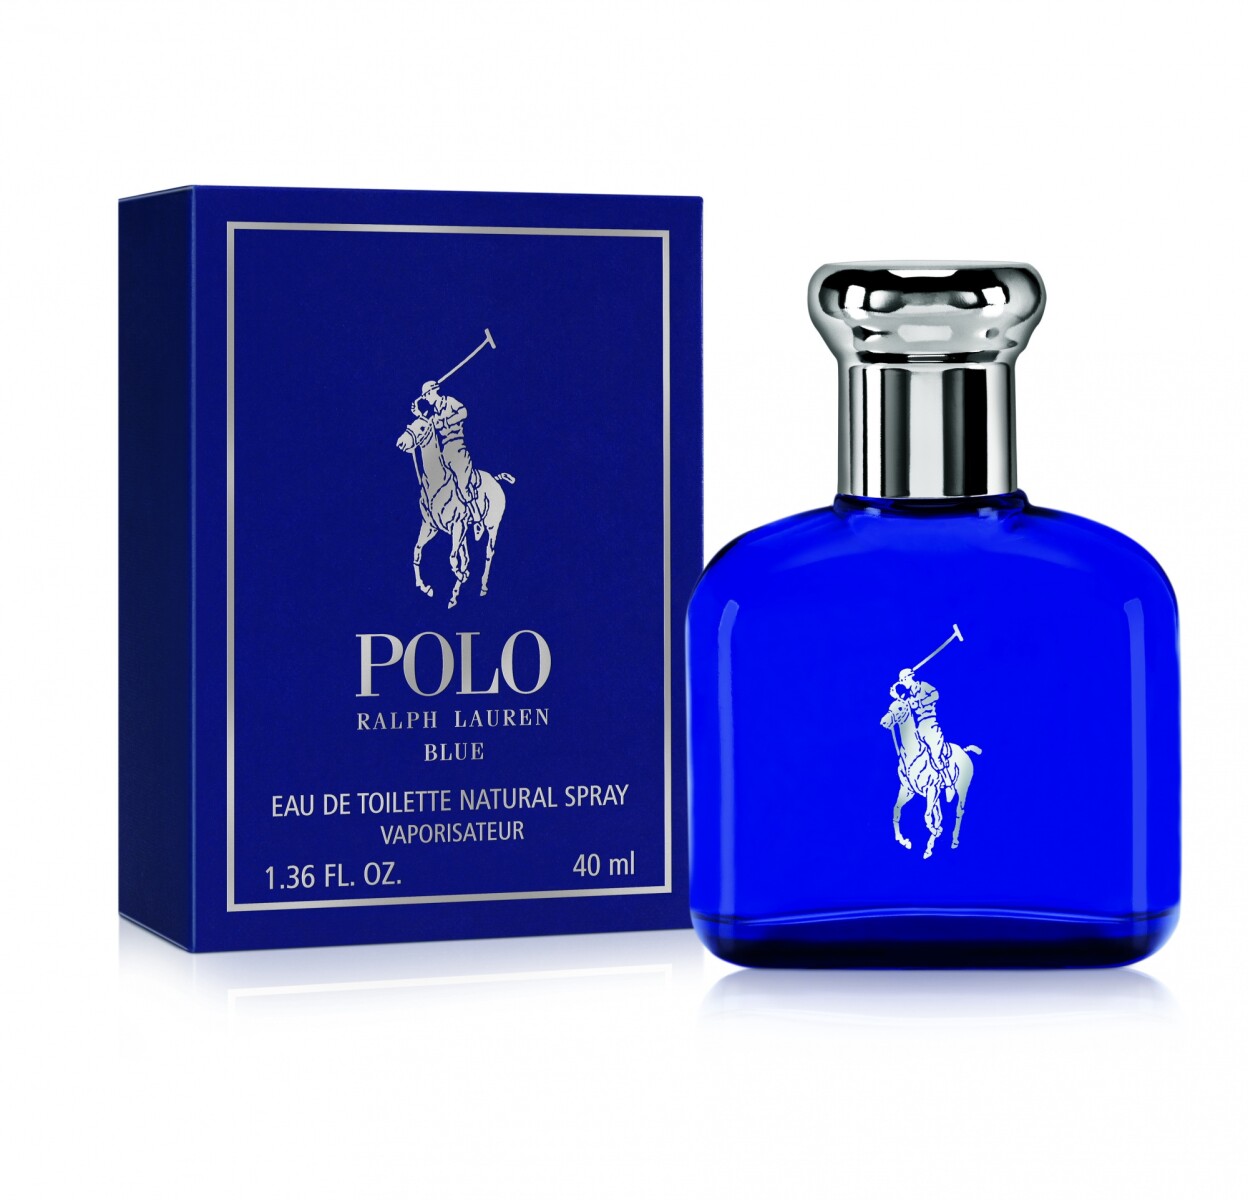 Ralph Lauren Perfume Polo Blue EDT 40 ml - Ralph Lauren Polo Blue EDT 40 ml 